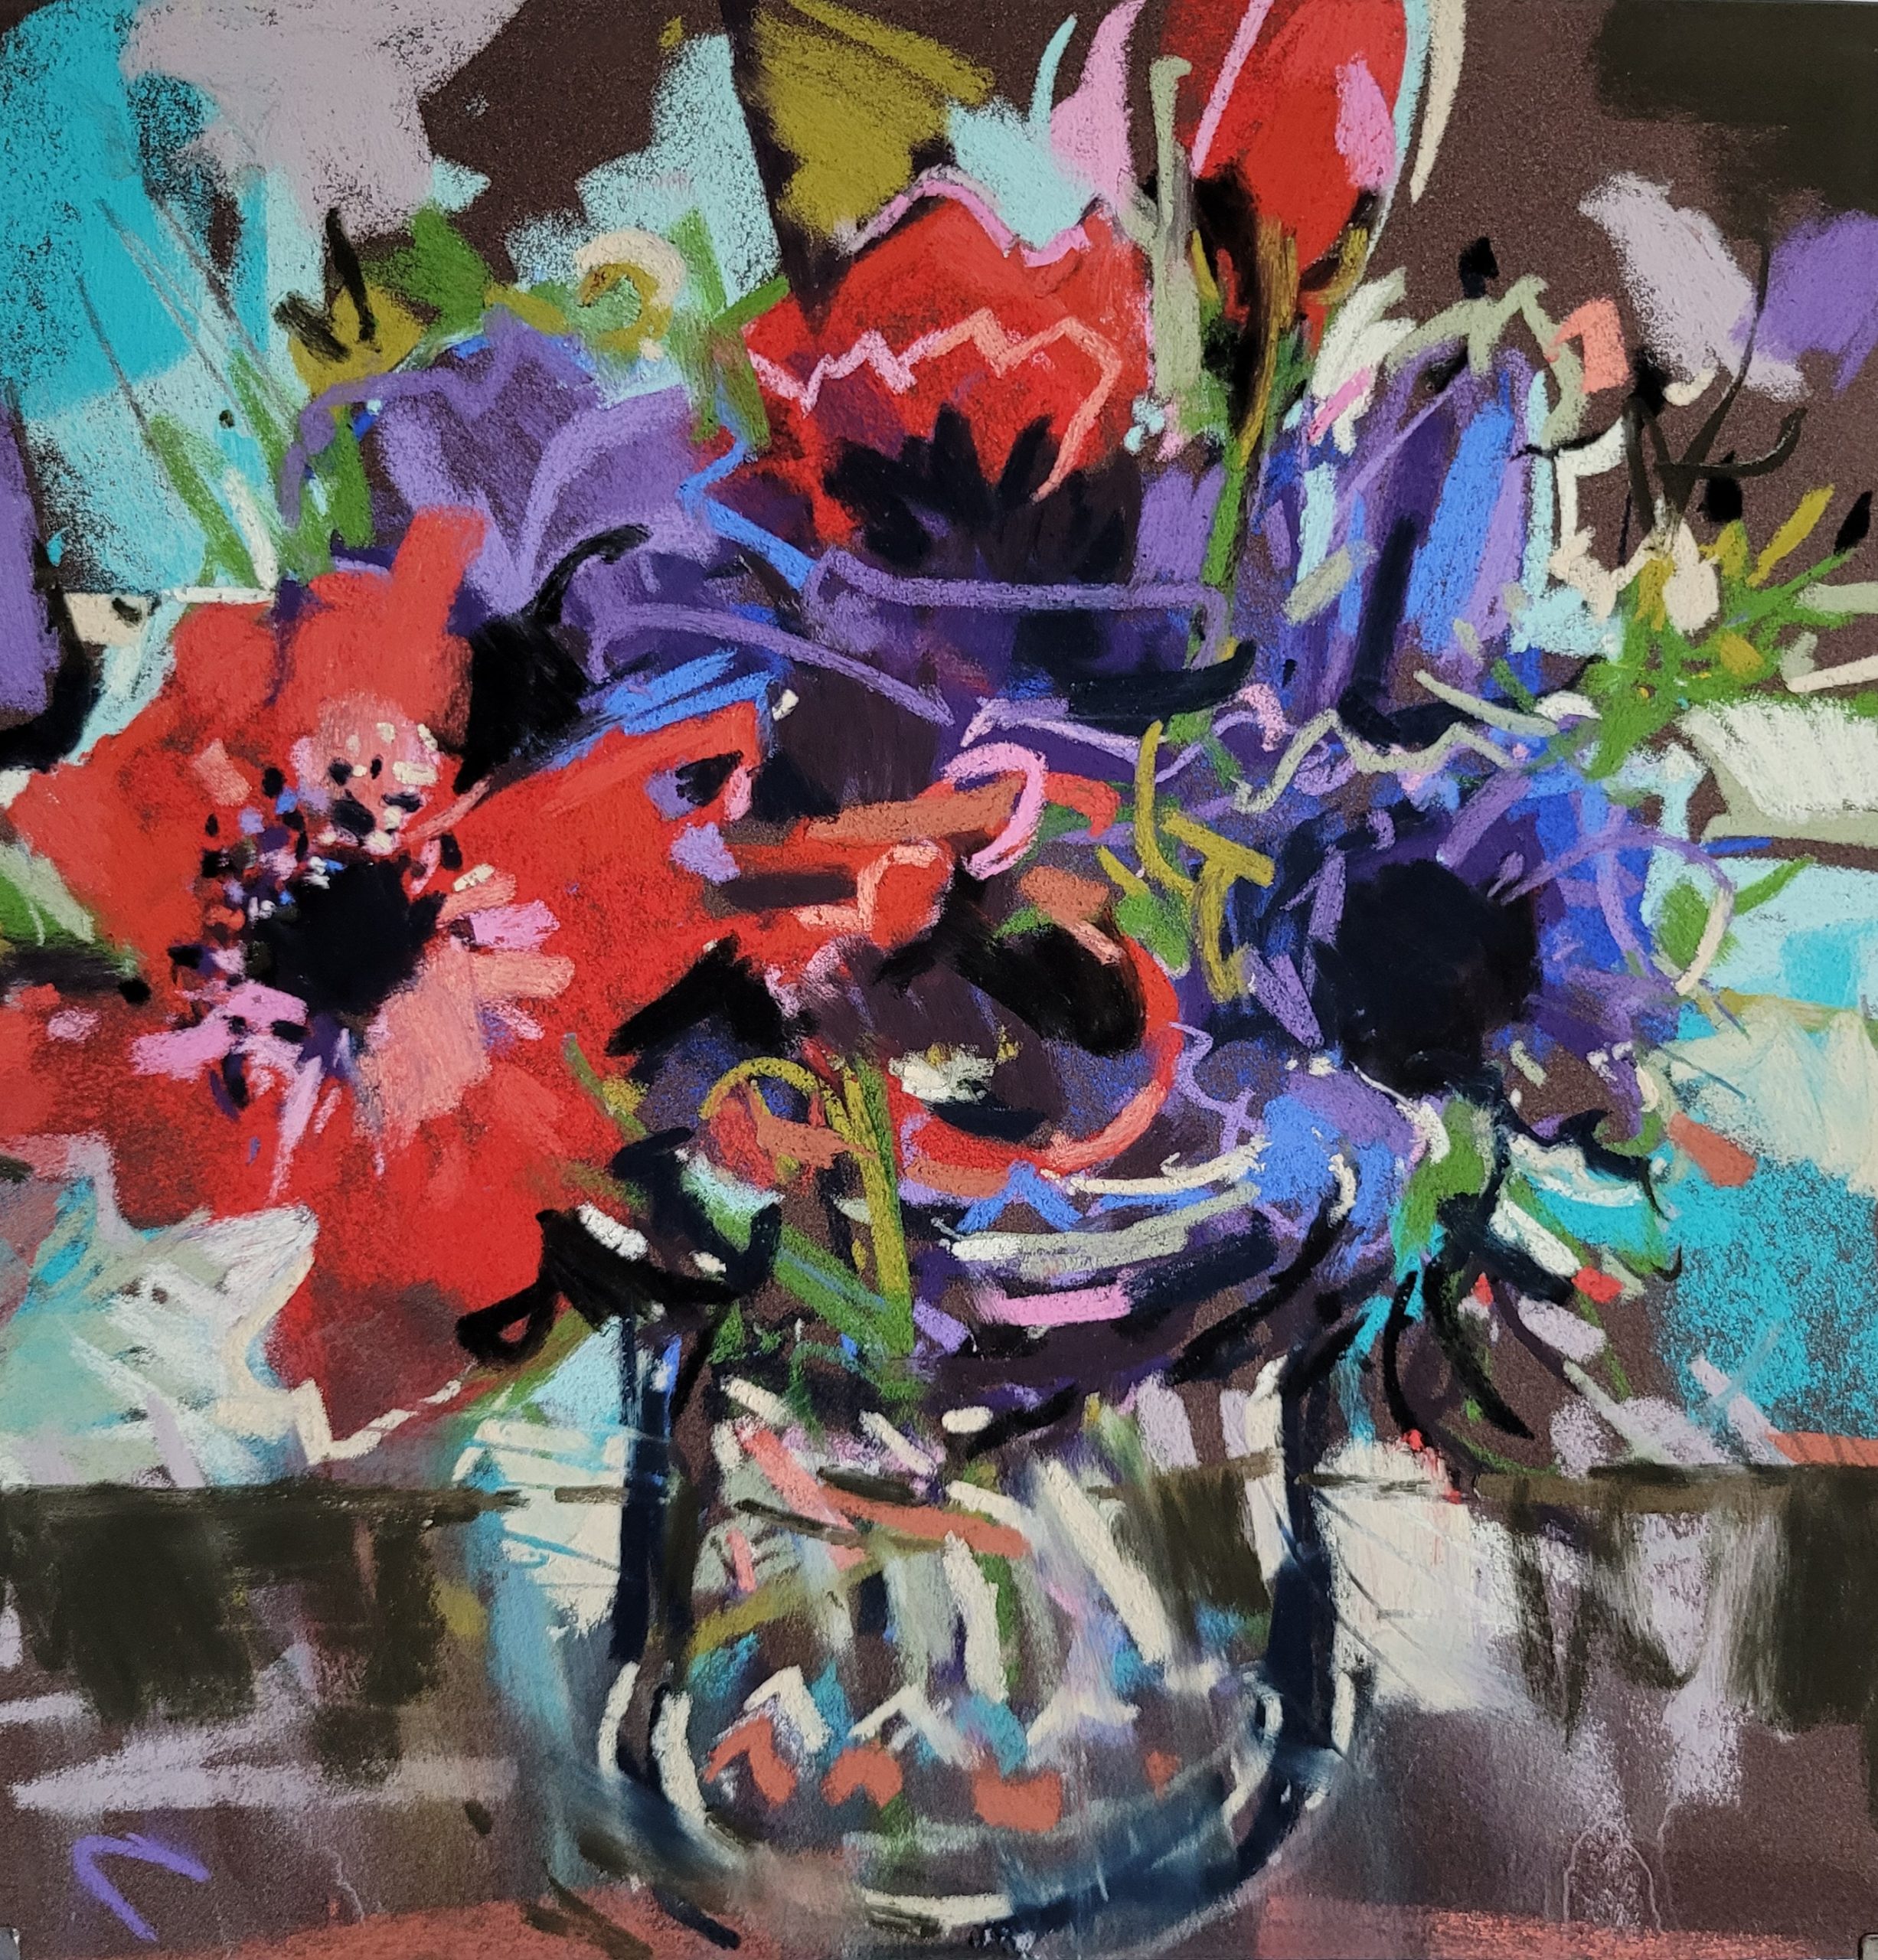 Richard Suckling, "From the Garden," 2022, pastels on Sennelier La Carte Pastelcard, 46 x 42.5 cm